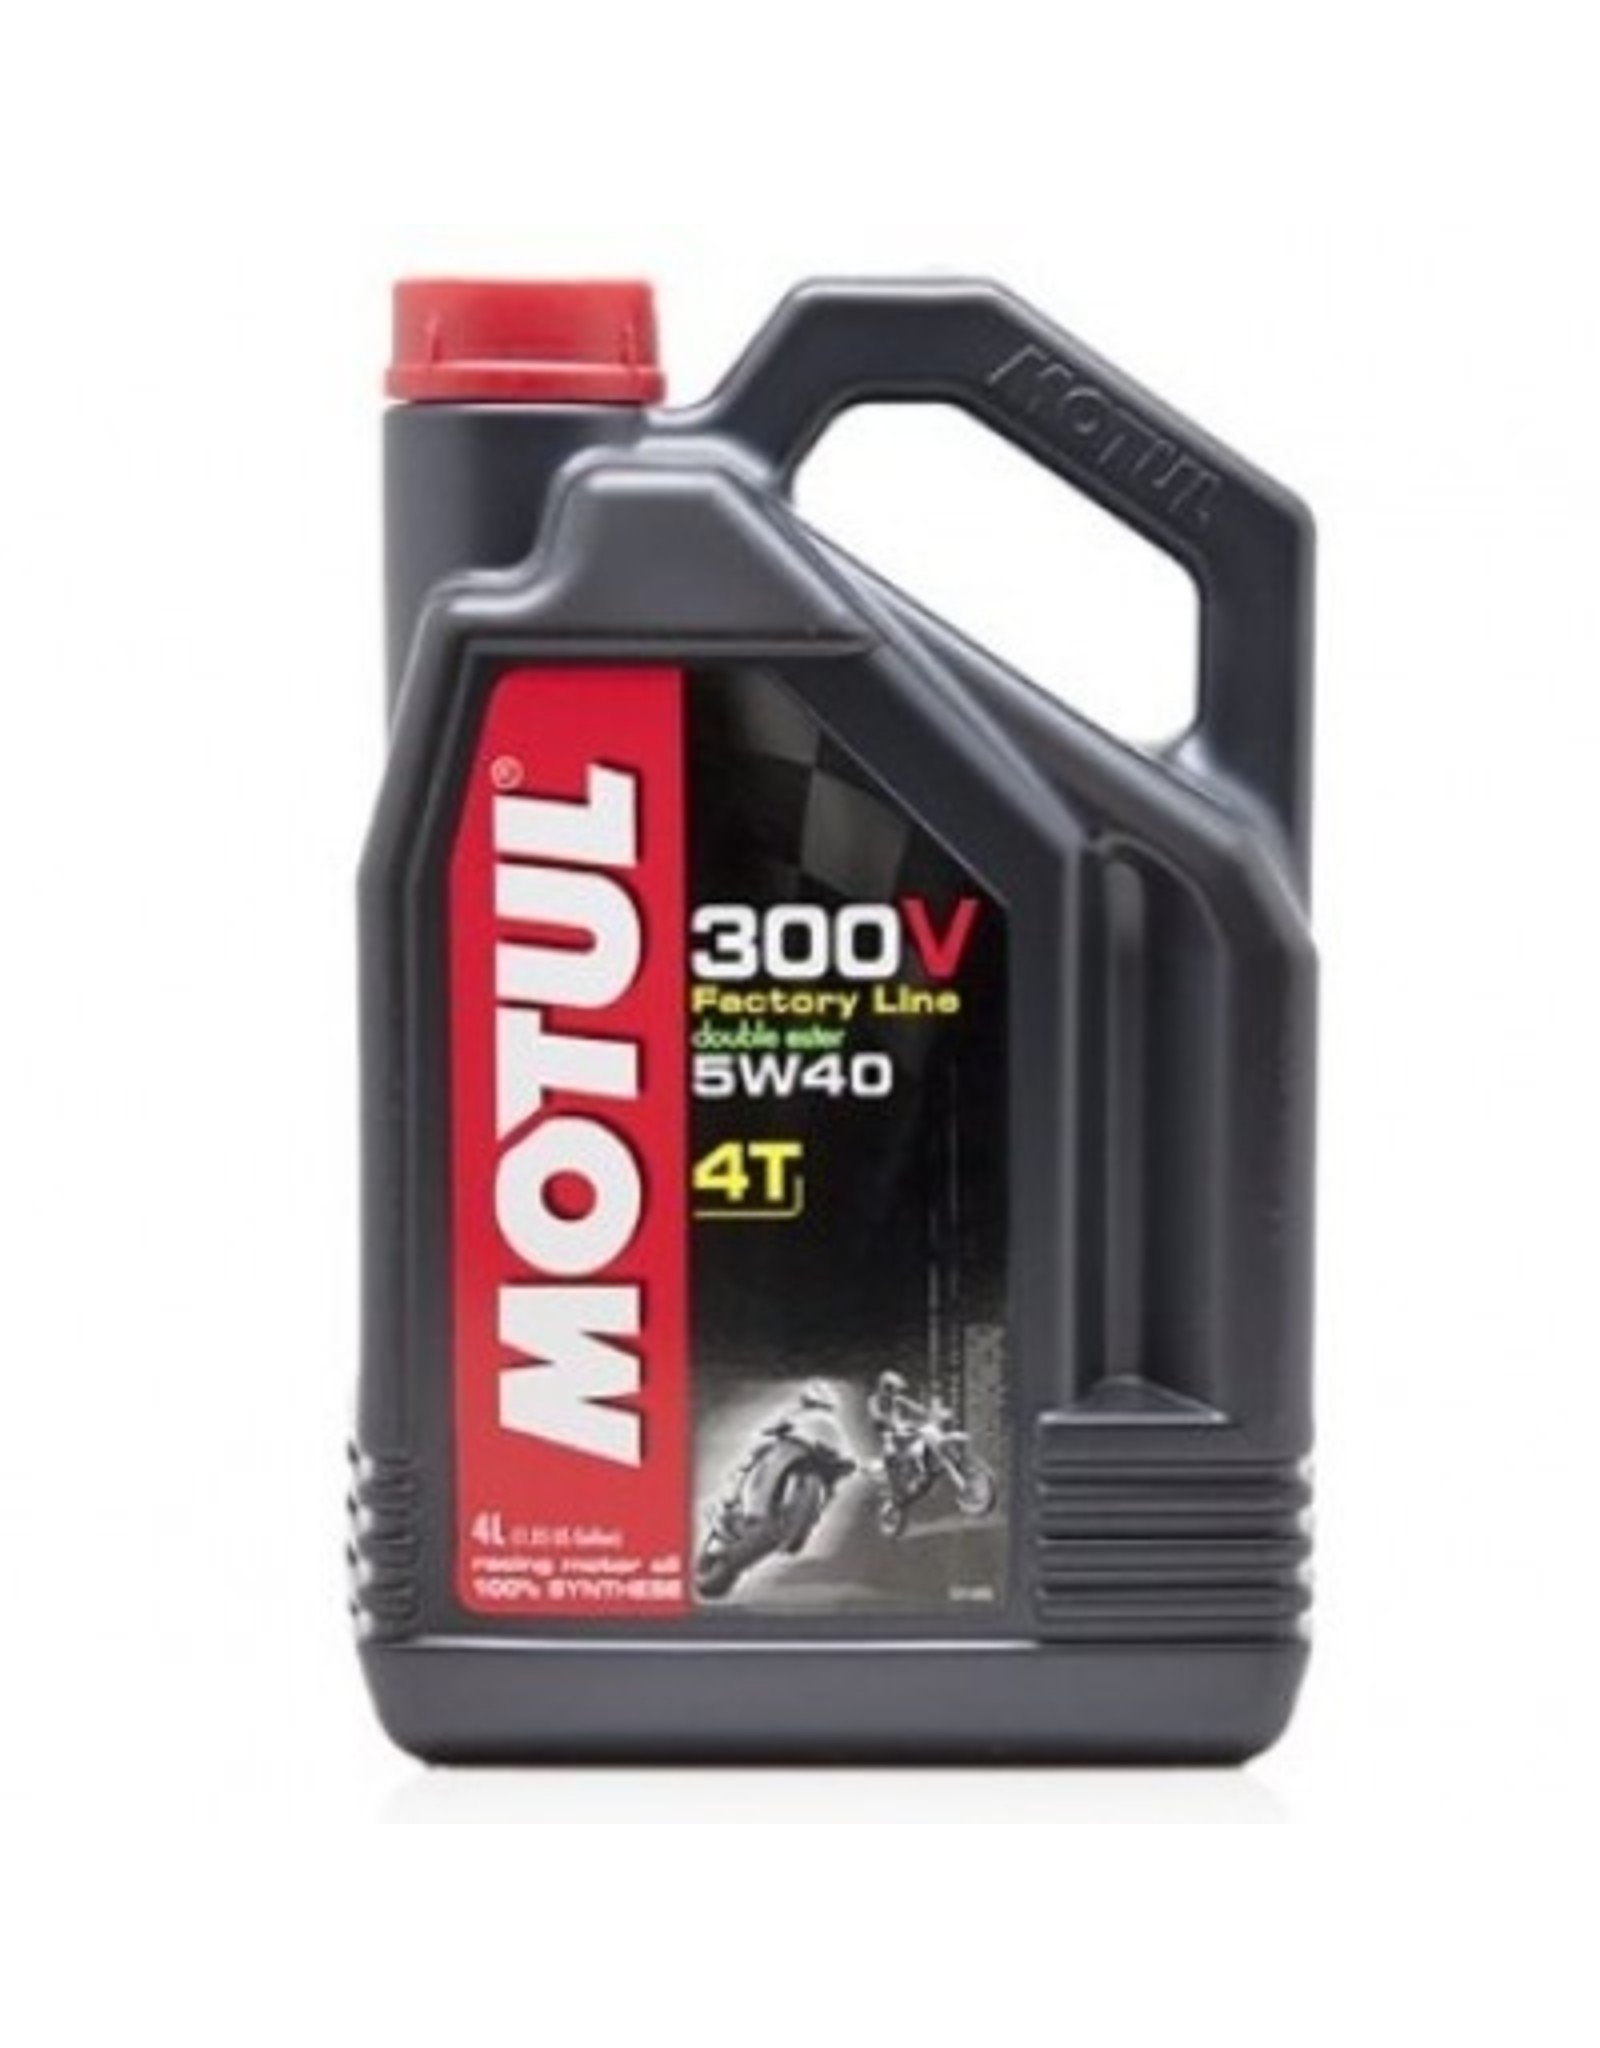 4T Racing Motor Oil Motul 300V Factory Line Off Road 5W40, 4L - MOT 300V OR  5W40 4L - Pro Detailing